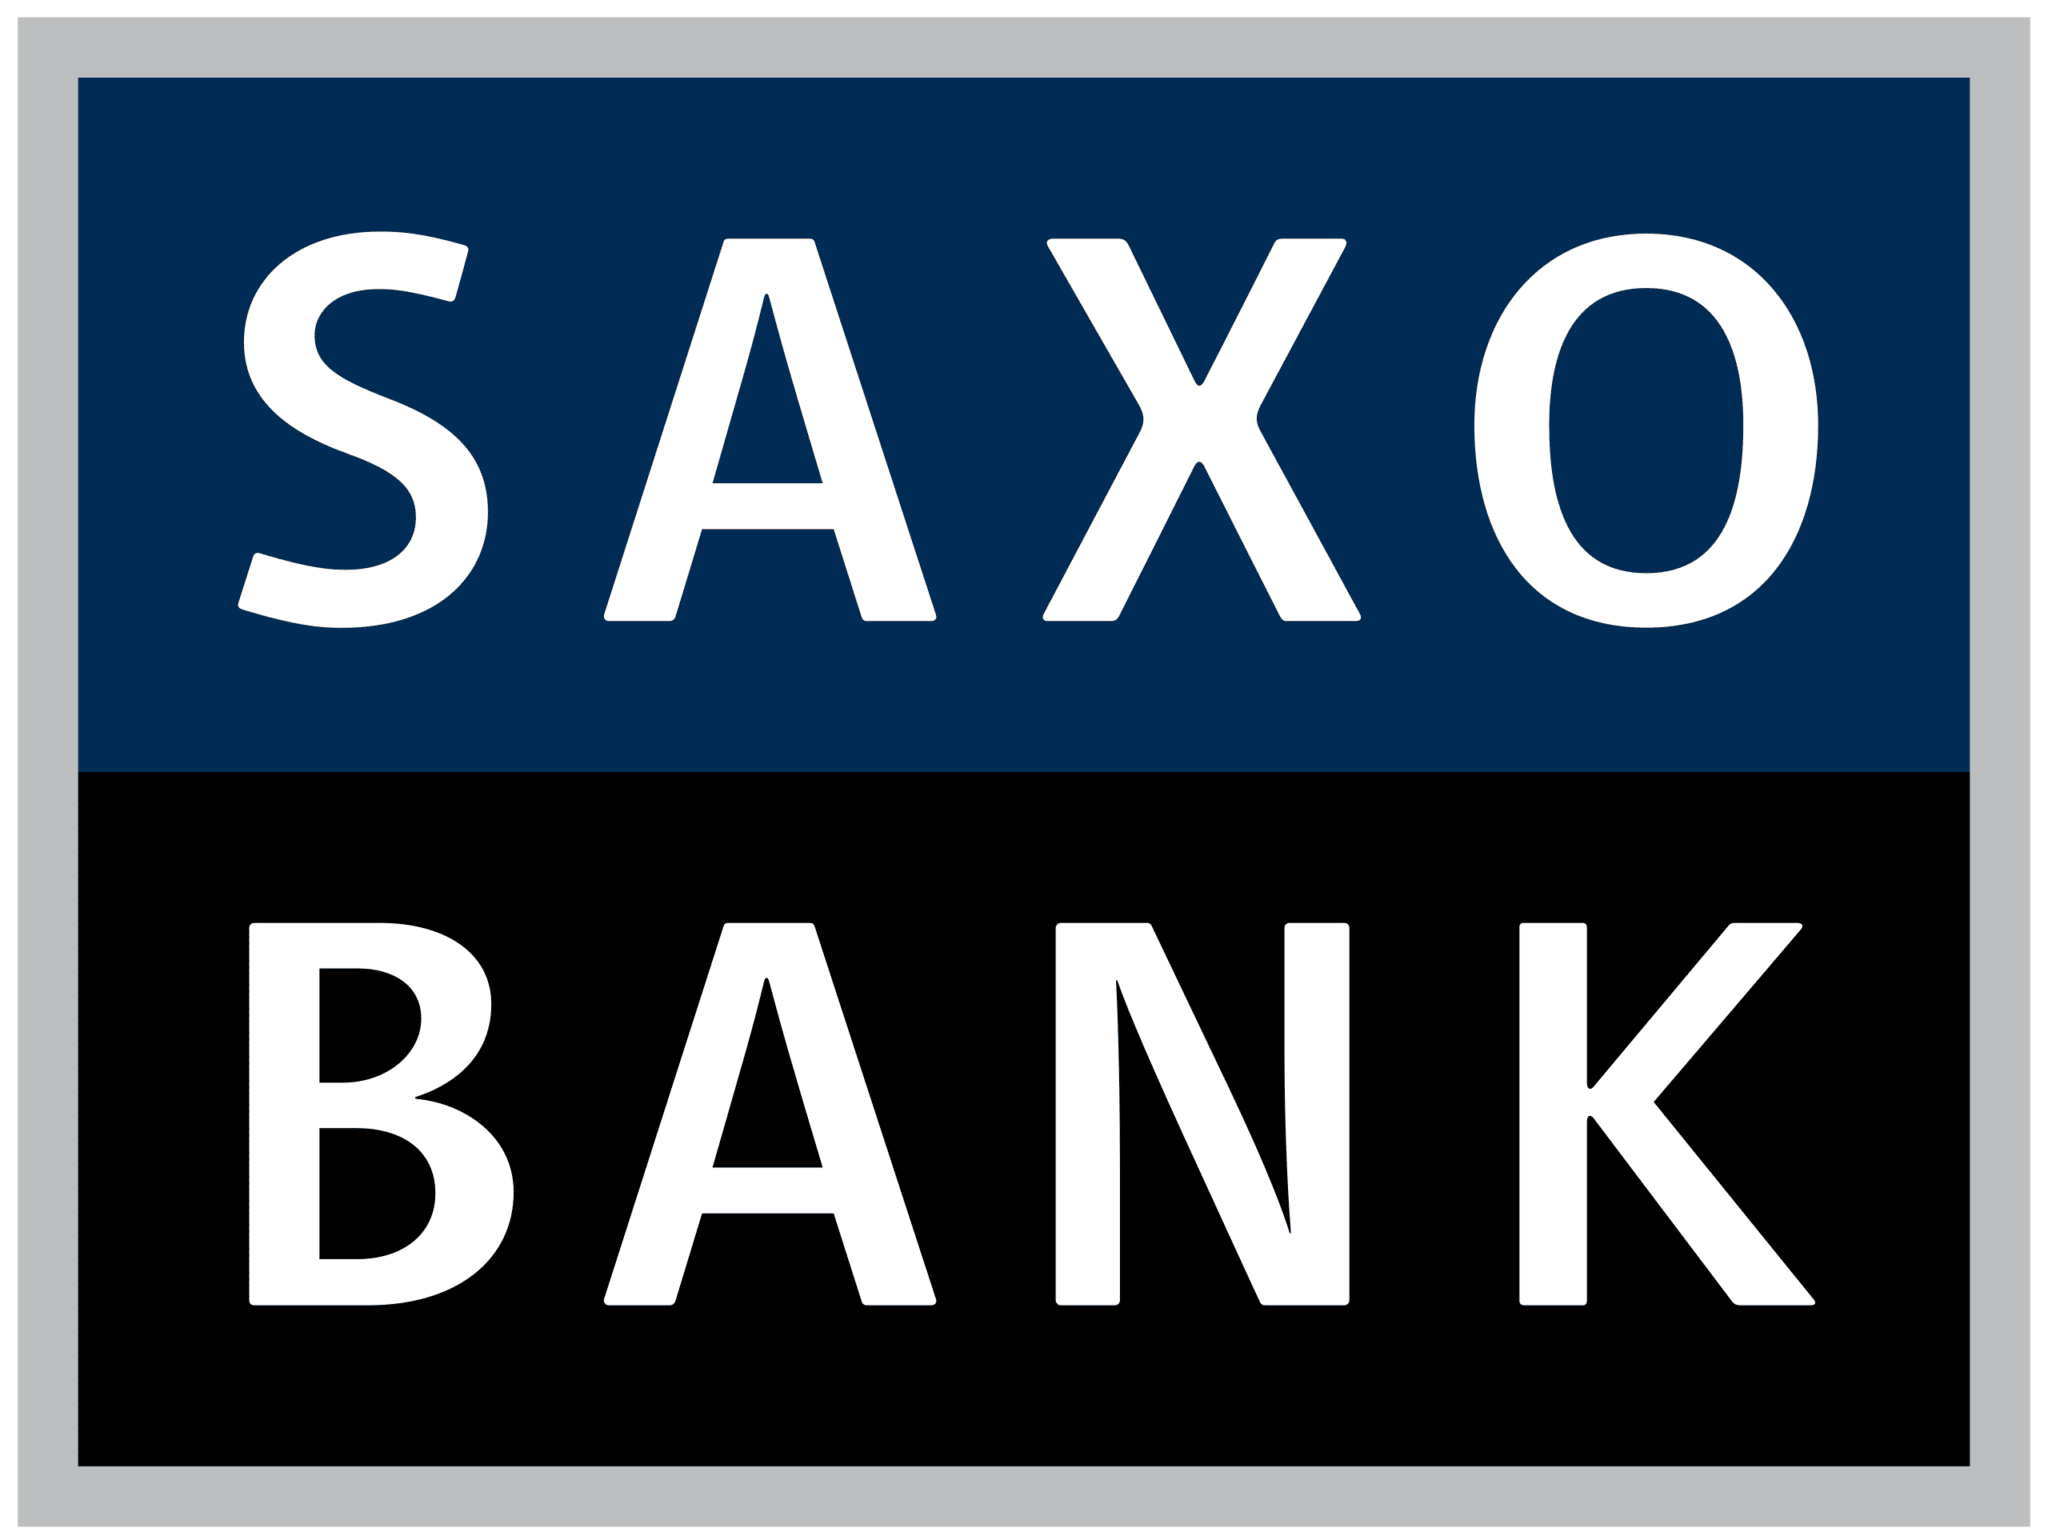 Saxo Bank Trading Platform Review